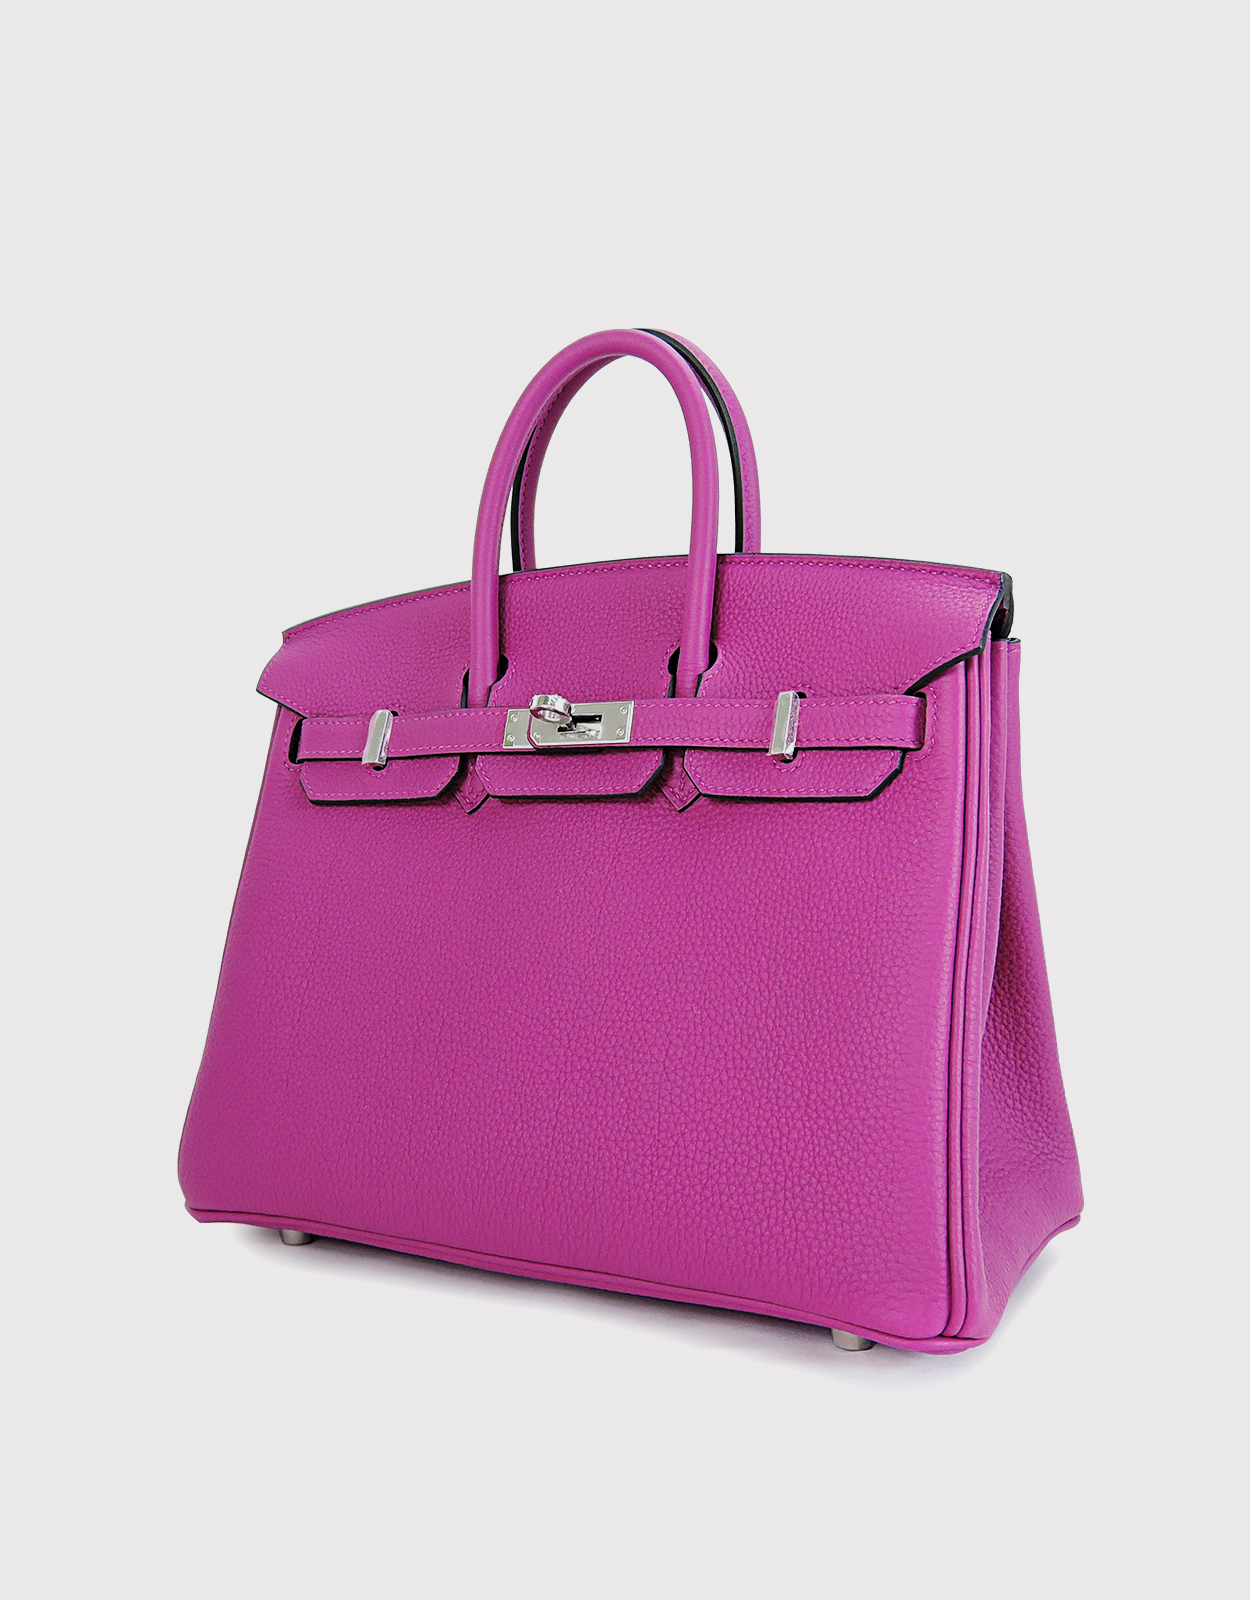 Hermès Hermès Birkin 30 Togo Leather Handbag-Rose Purple